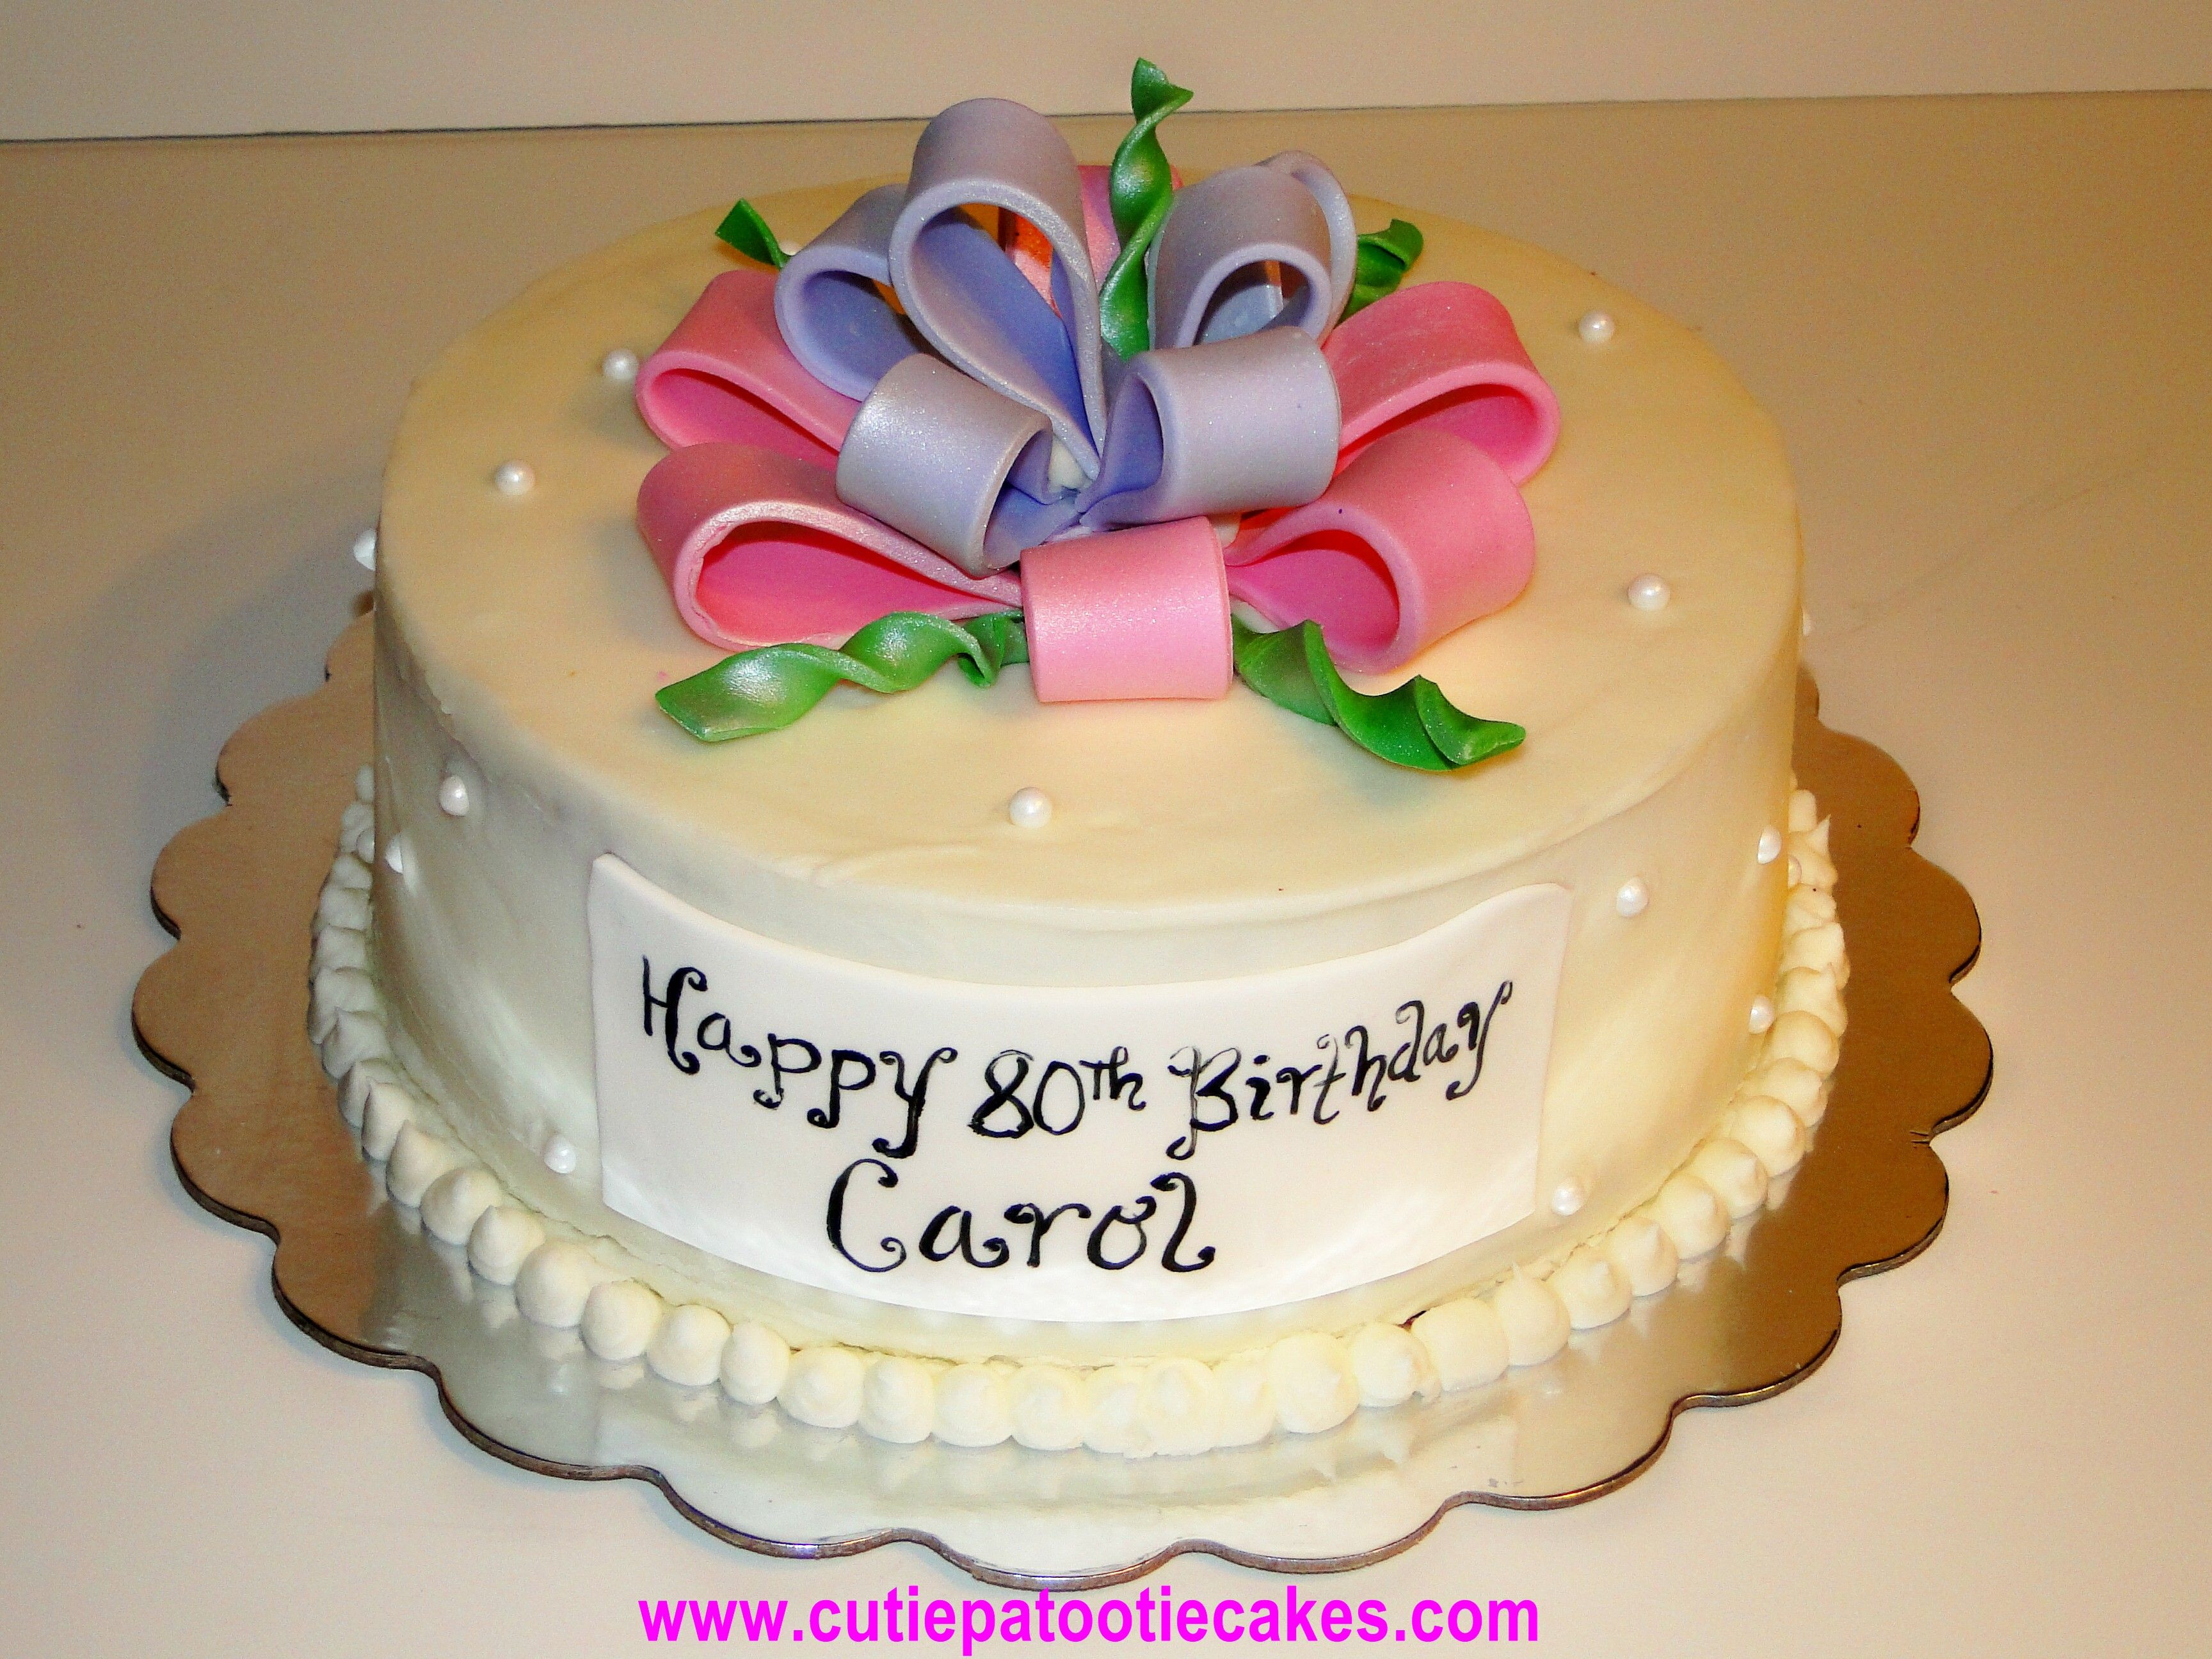 Best ideas about Happy Birthday Carol Cake
. Save or Pin Happy 80th Birthday Carol Cakes and Cupcakes Now.